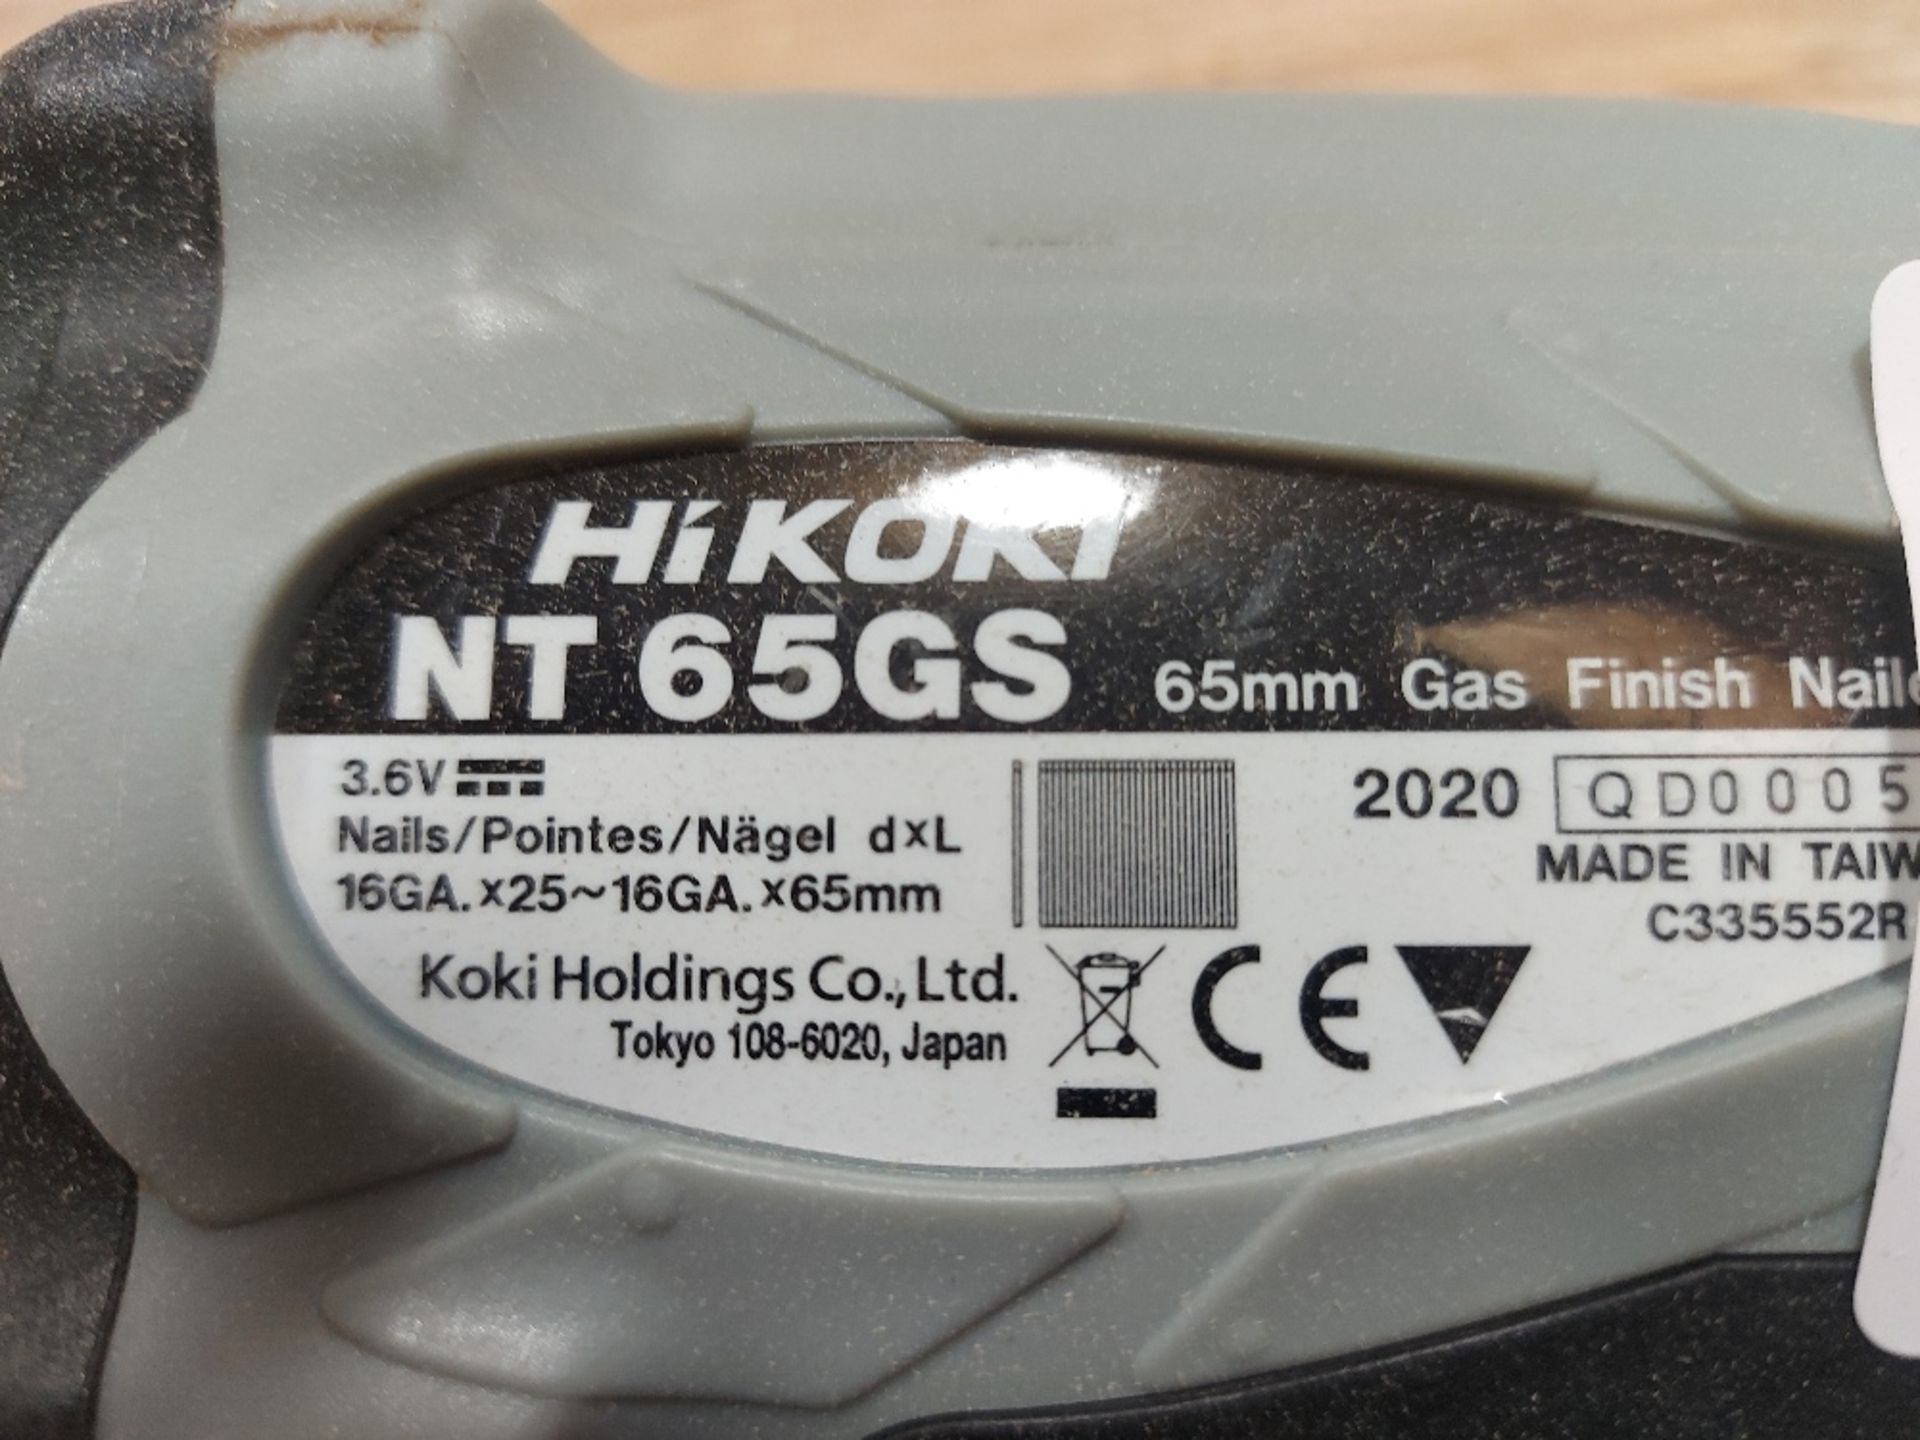 Hikoni NT65GS 65mm Gas Finish Nailer - Image 3 of 3